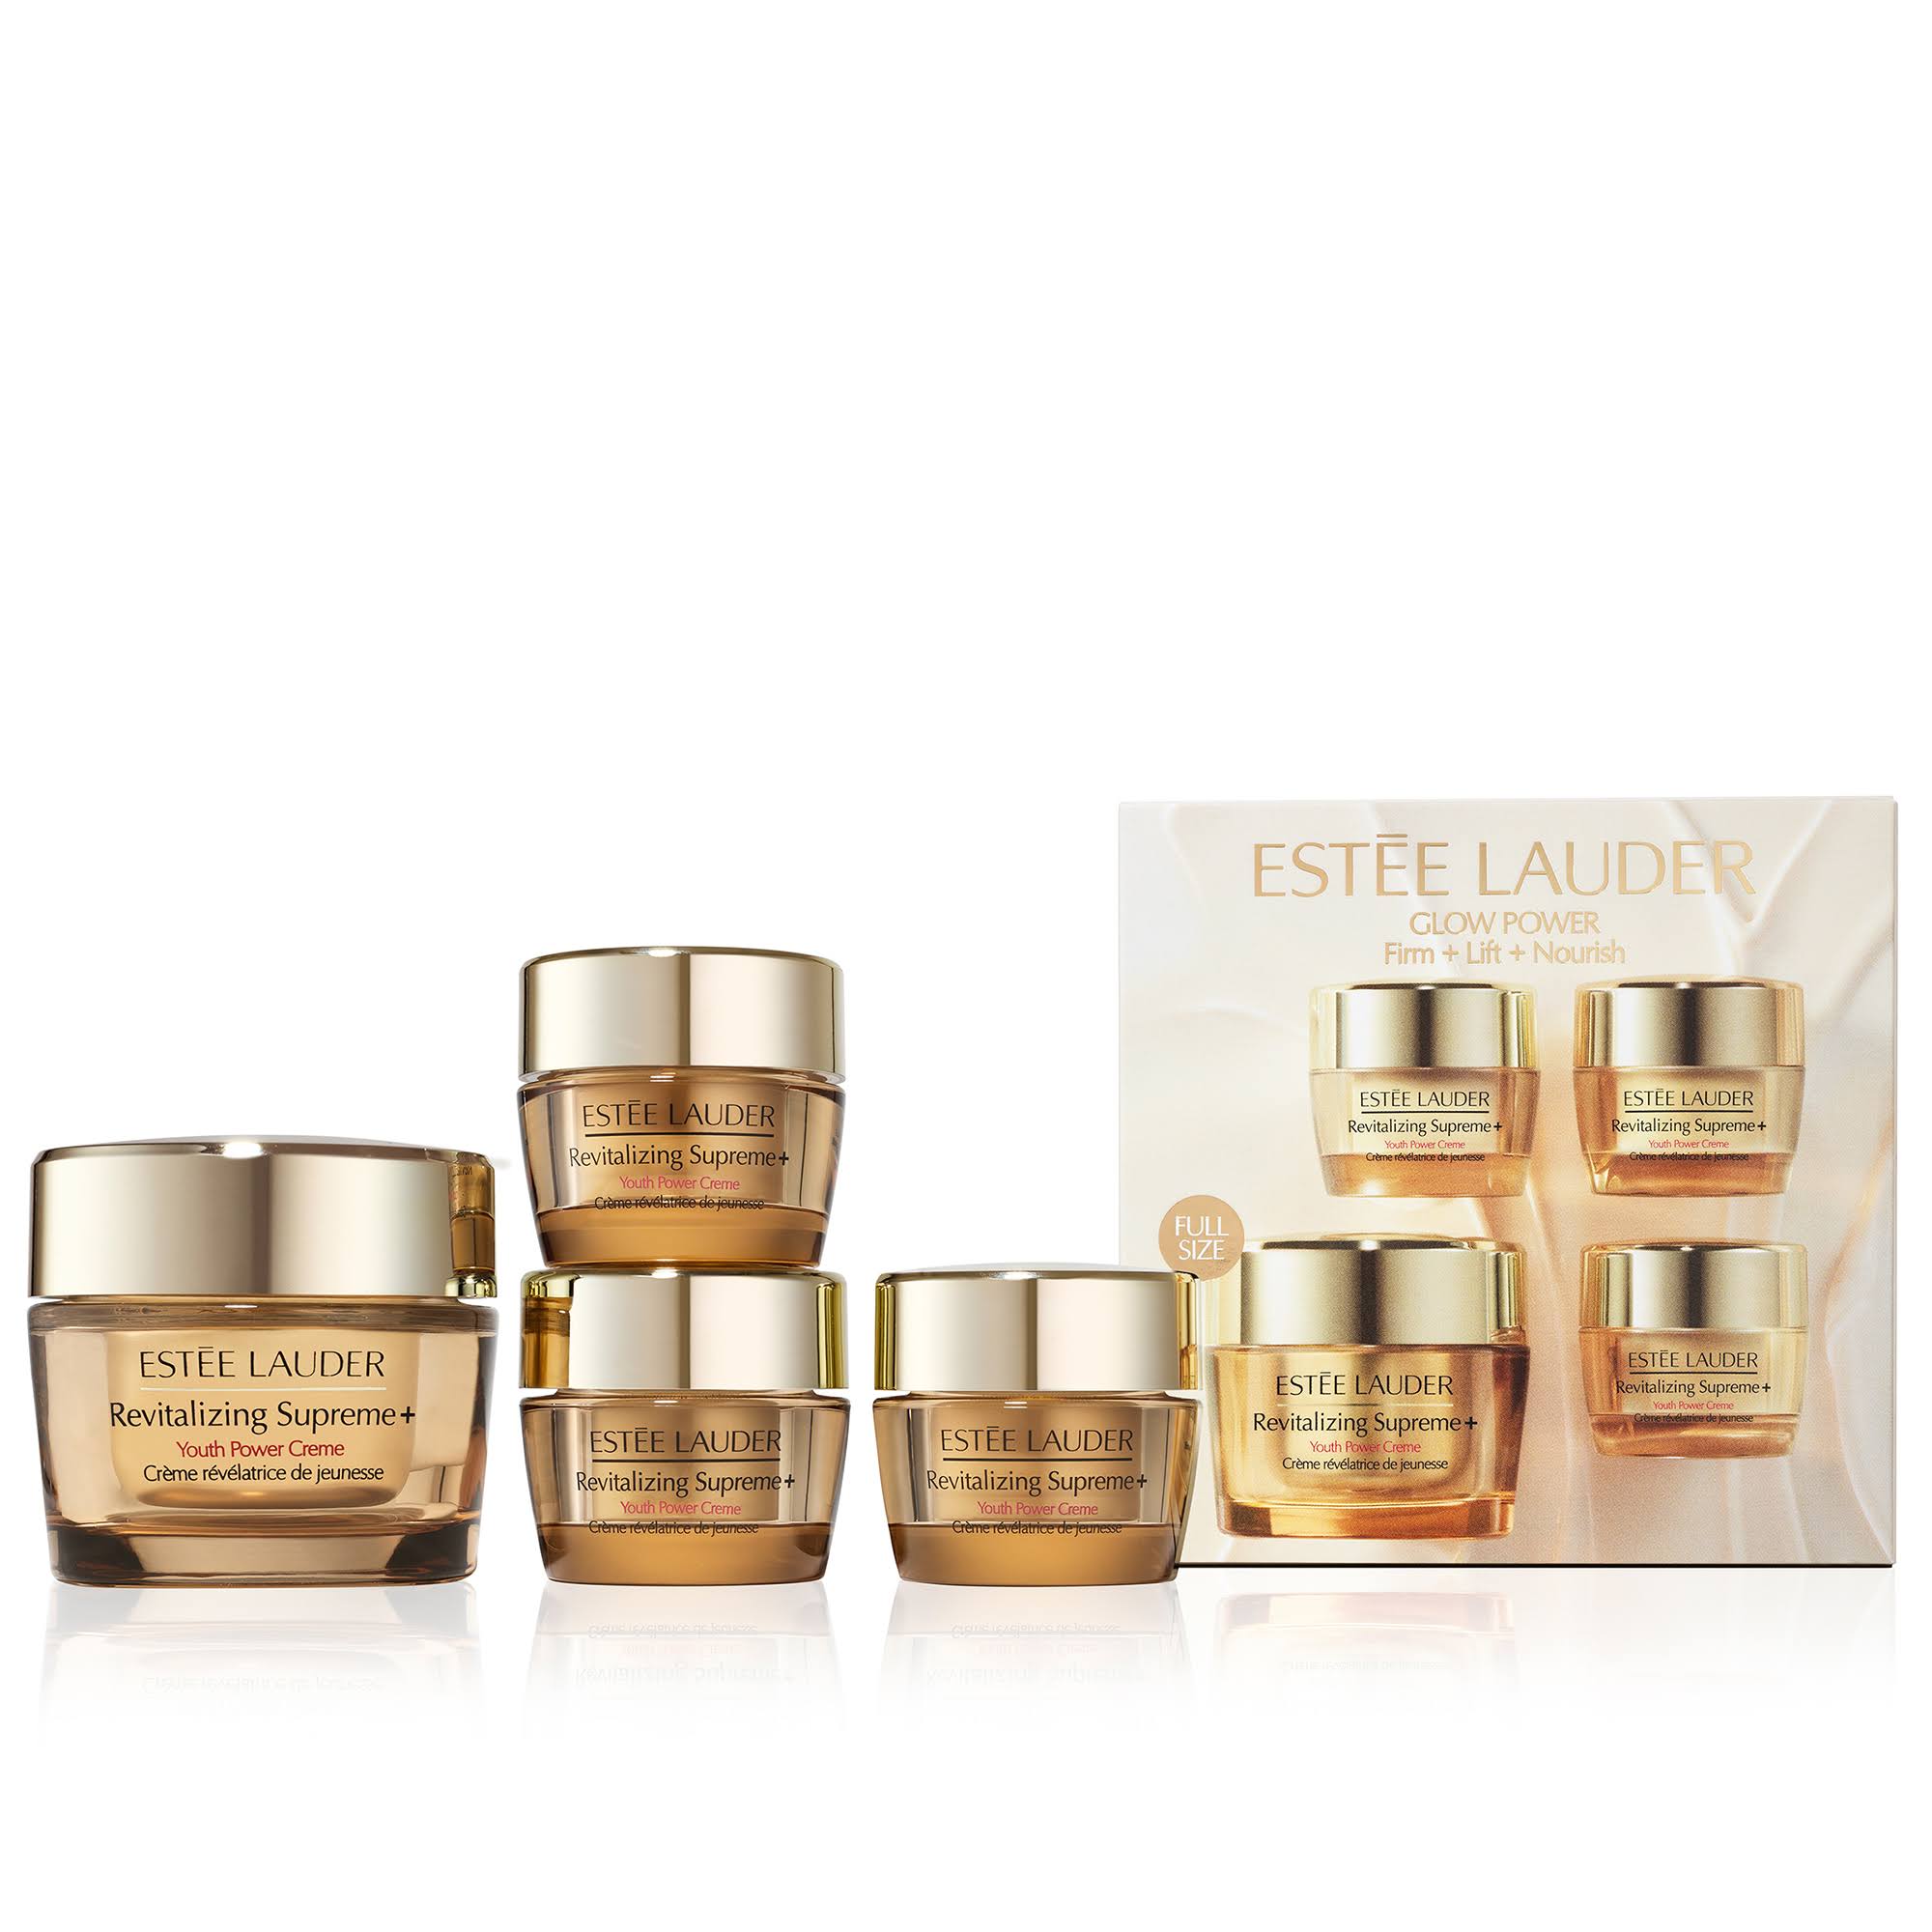 Estee Lauder Glow Power Revitalizing Supreme+ Moisturiser Skincare Gift Set